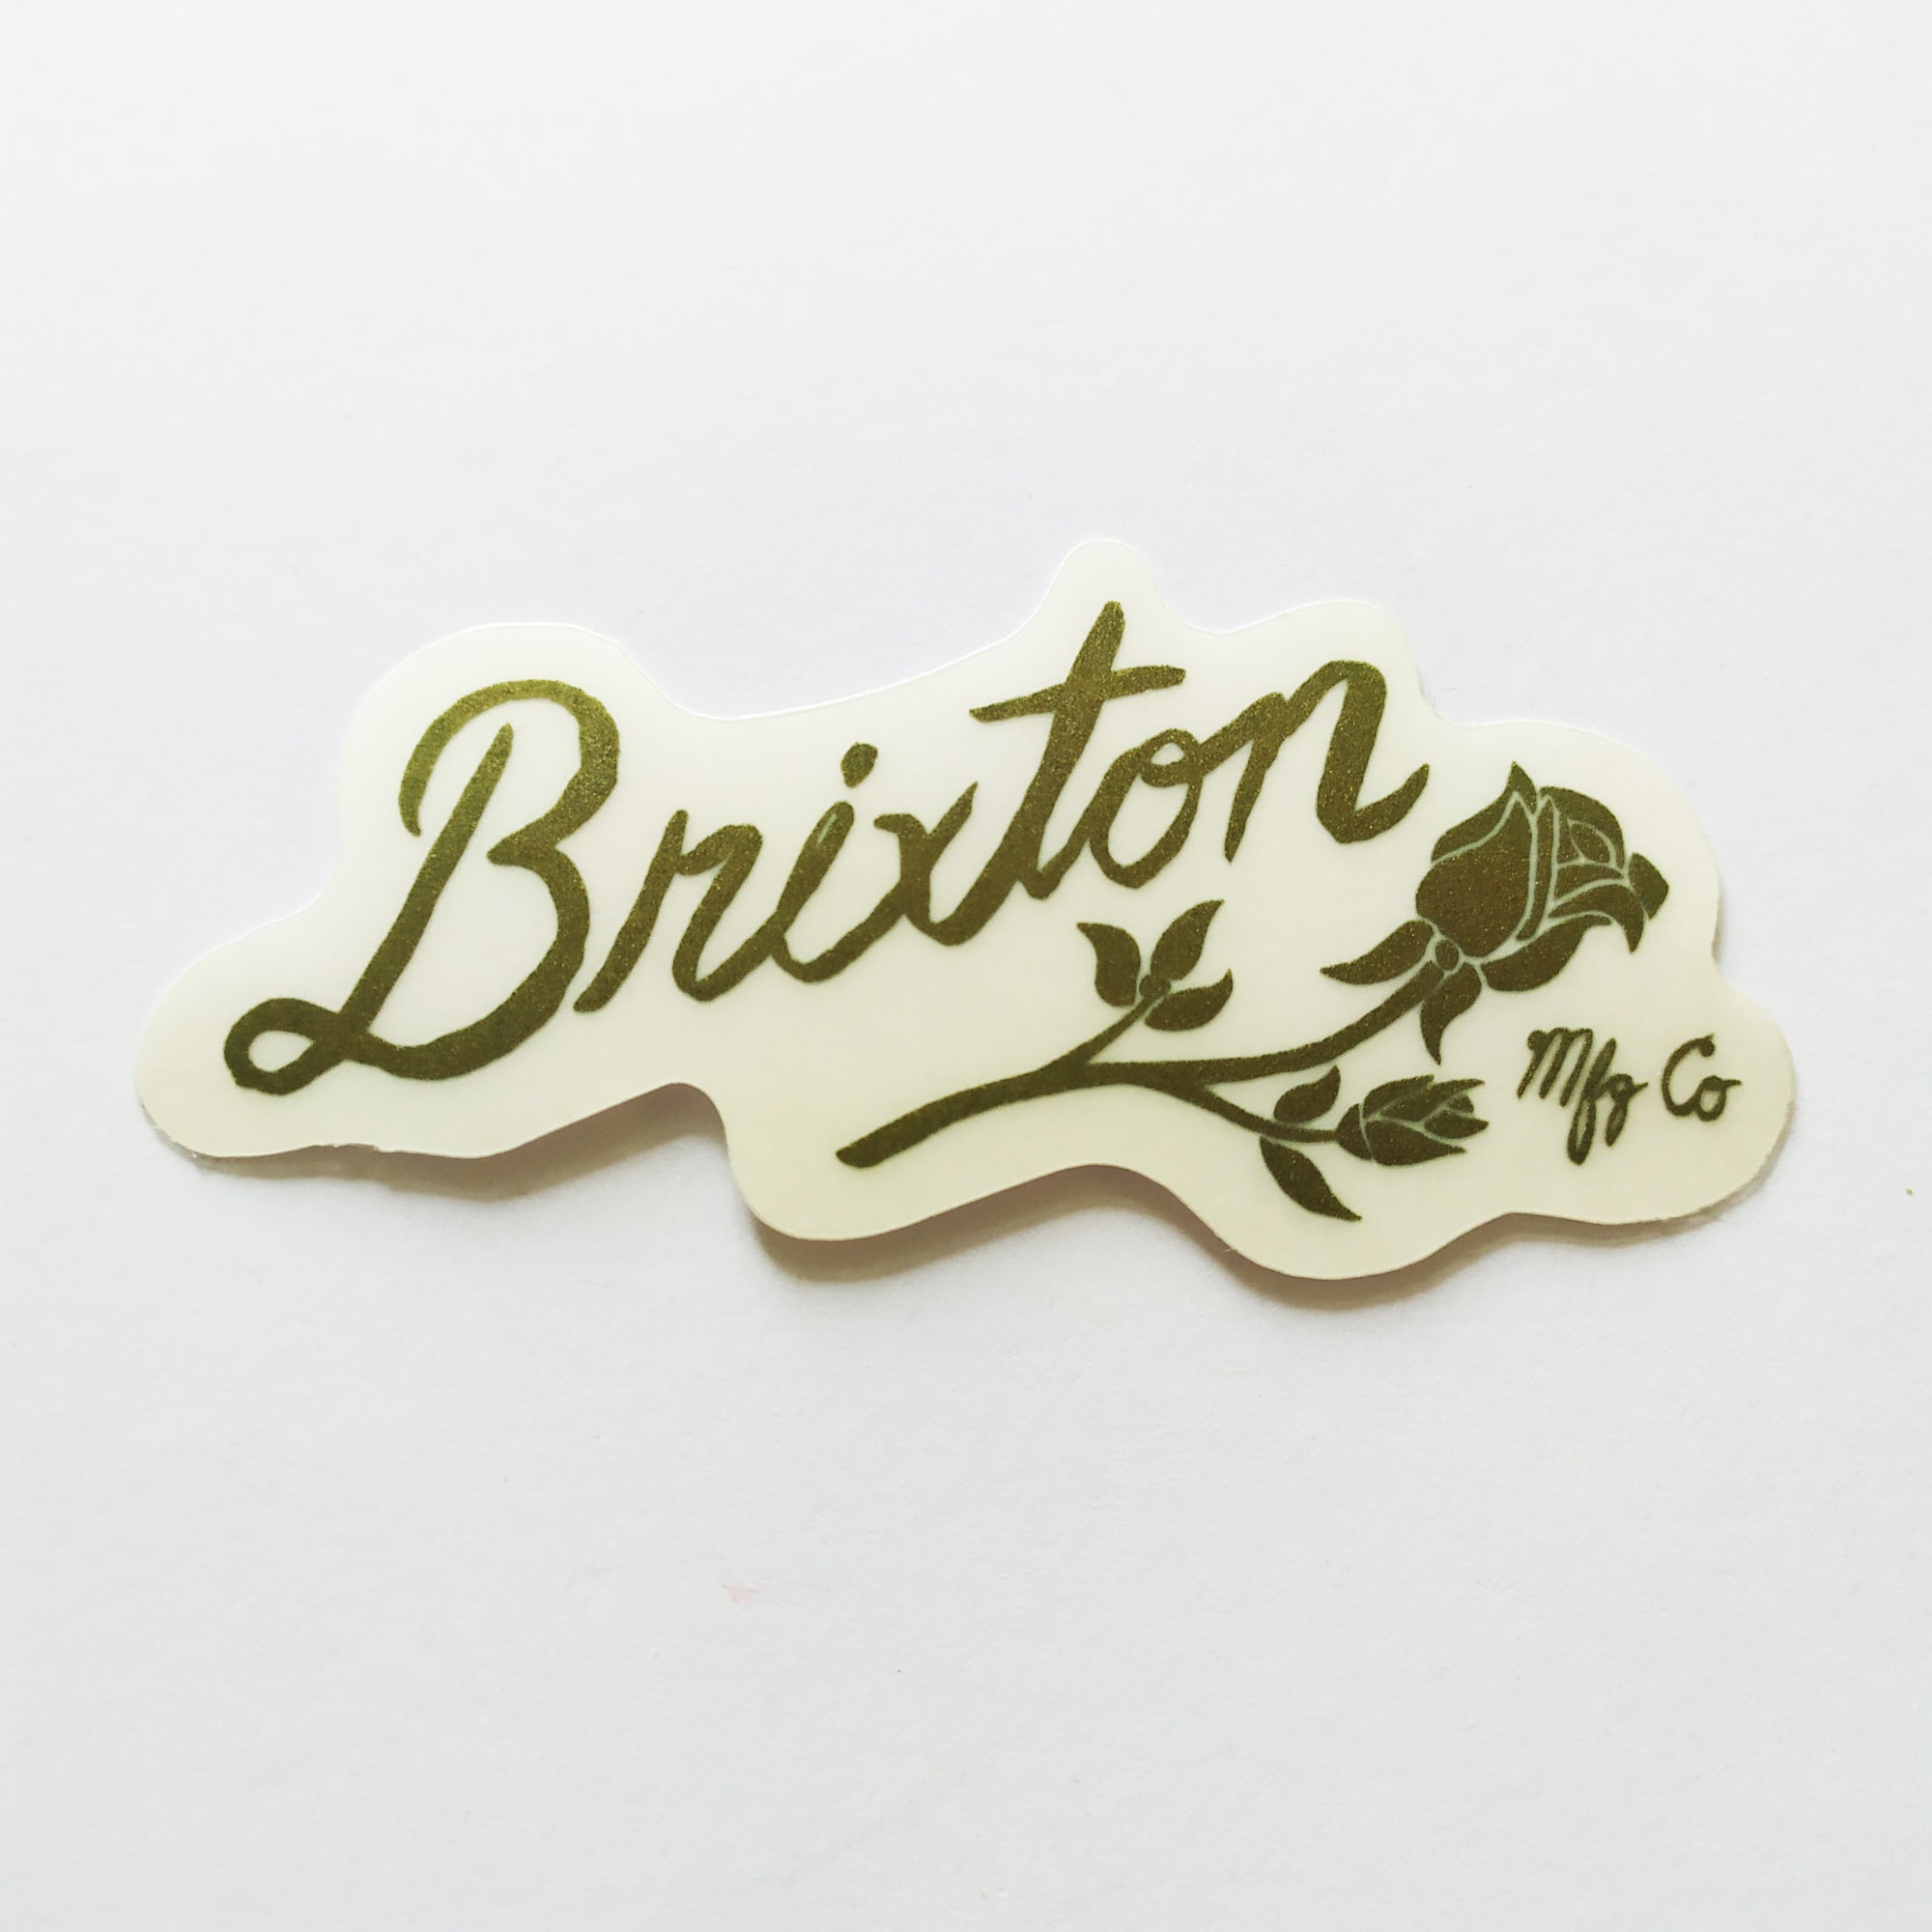 Brixton Clothing Skateboard Sticker